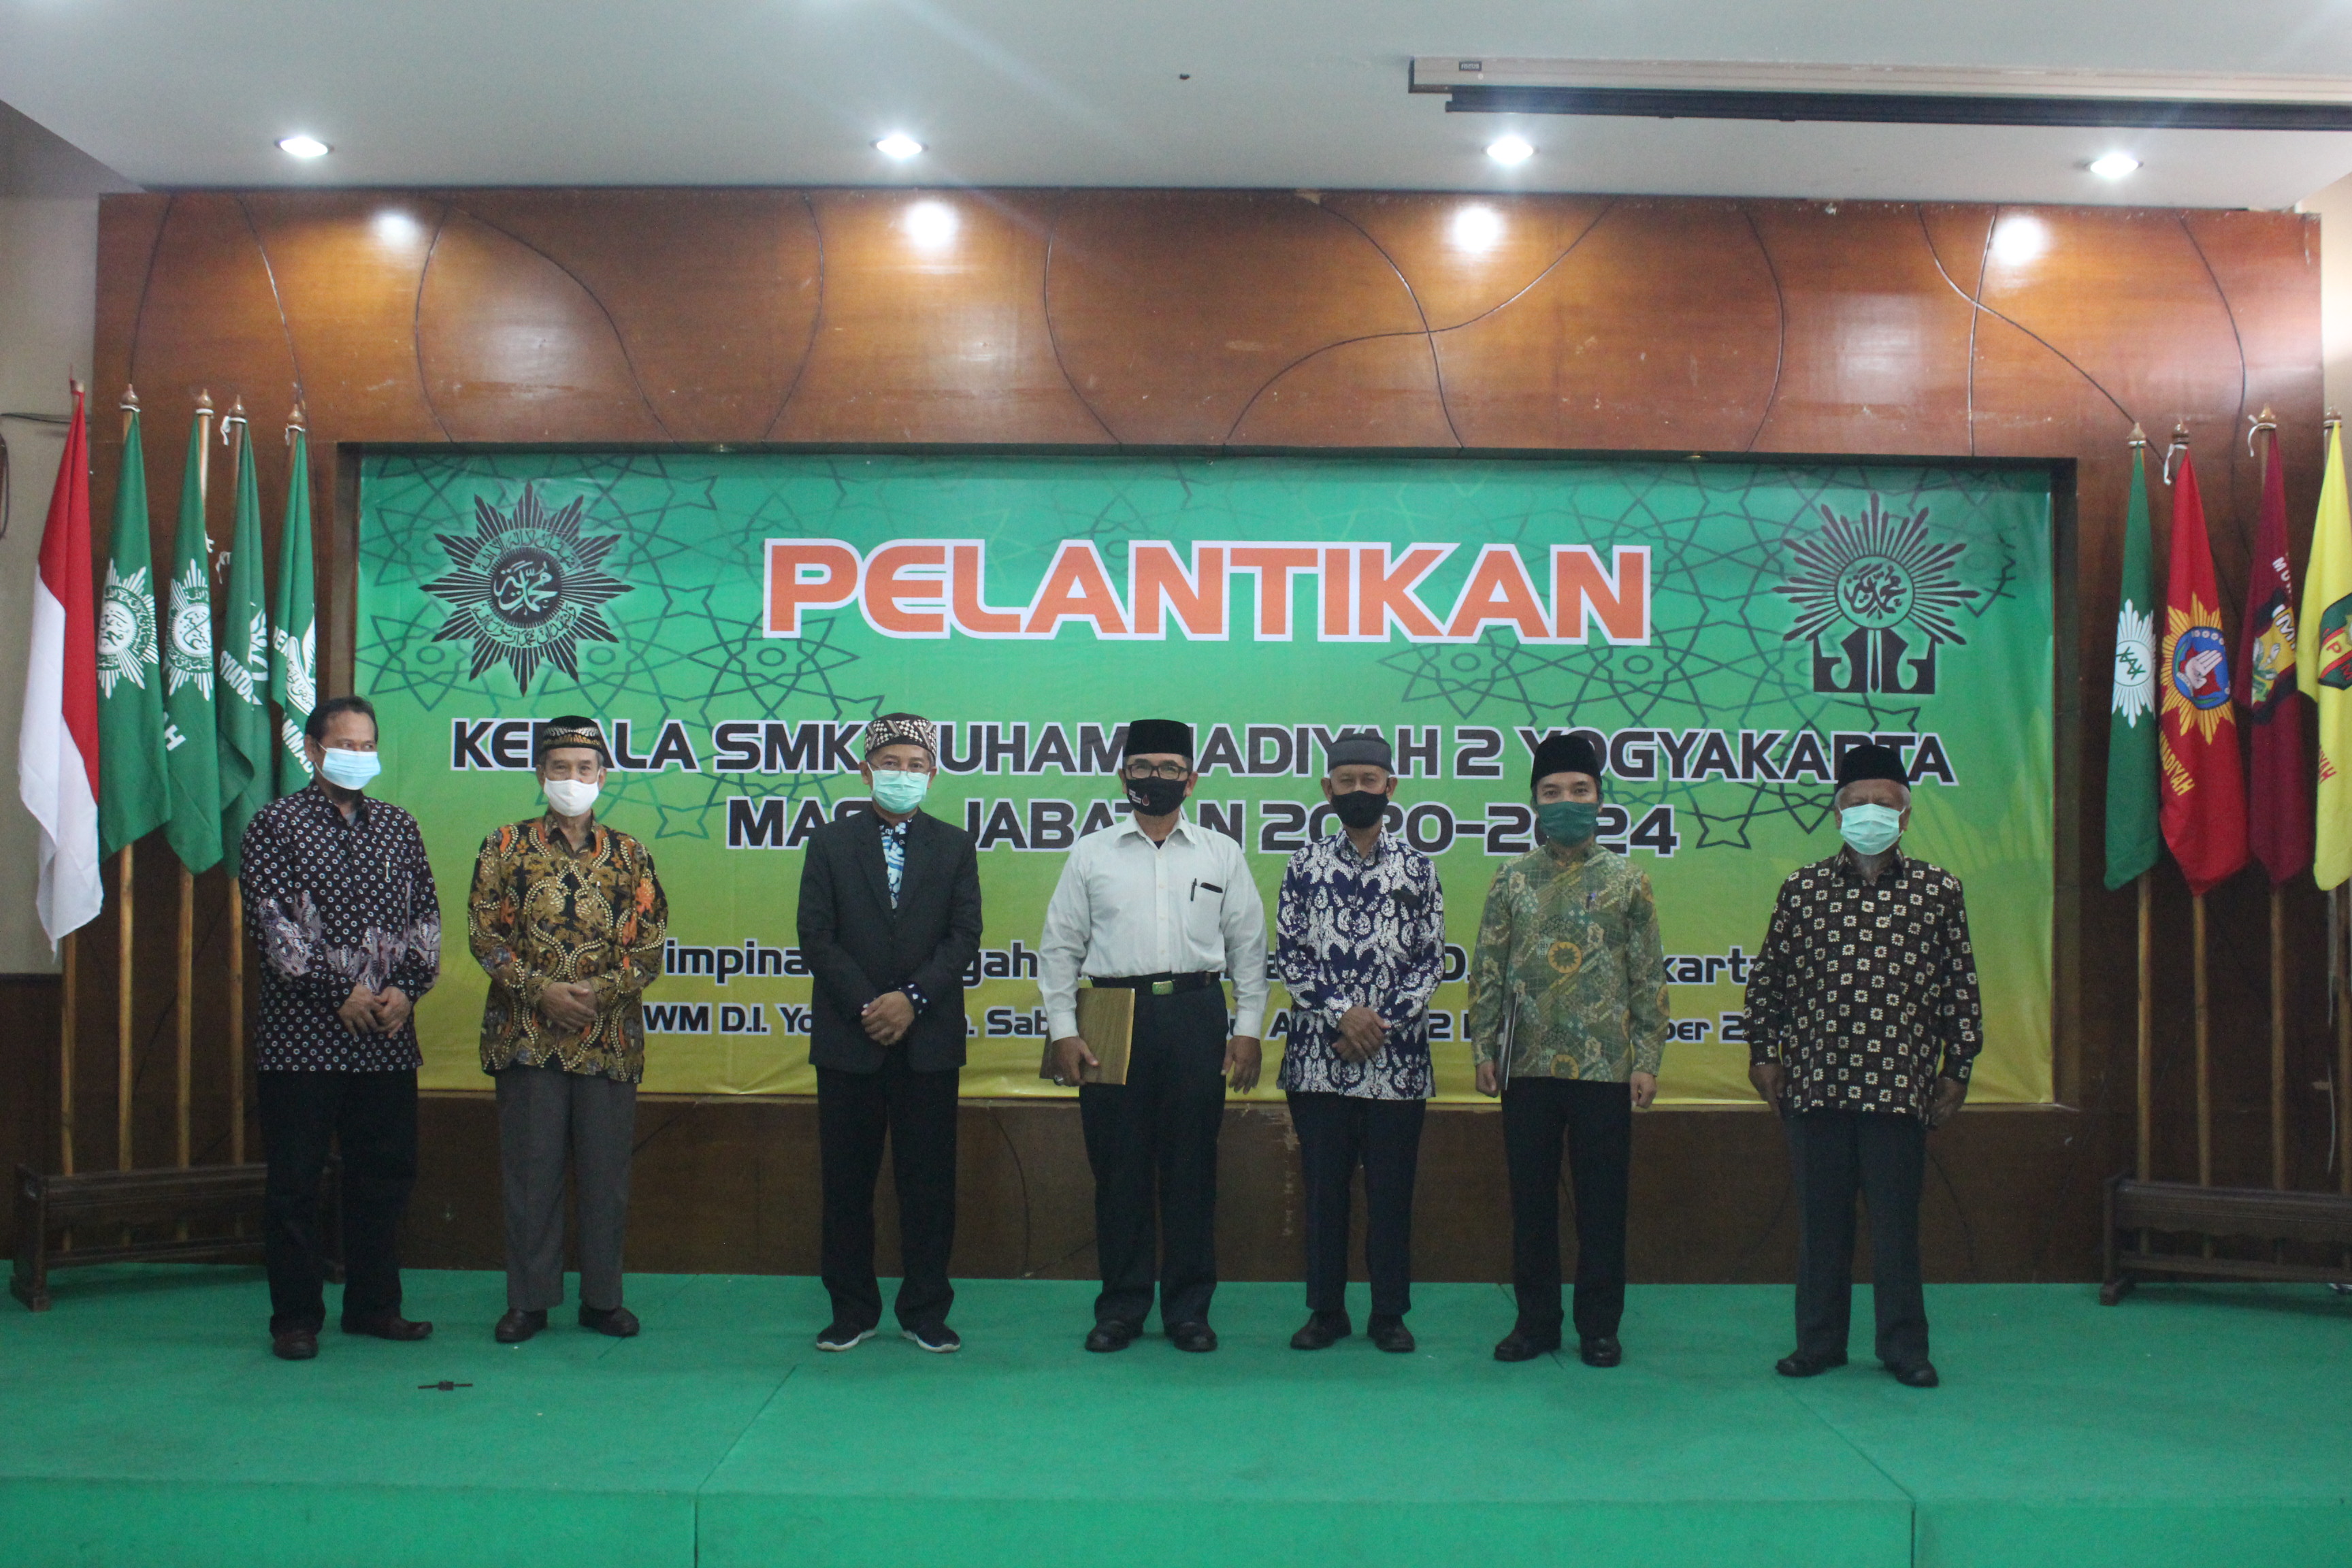 Pelantikan Kepala SMK Muhammadiyah 2 Yogyakarta